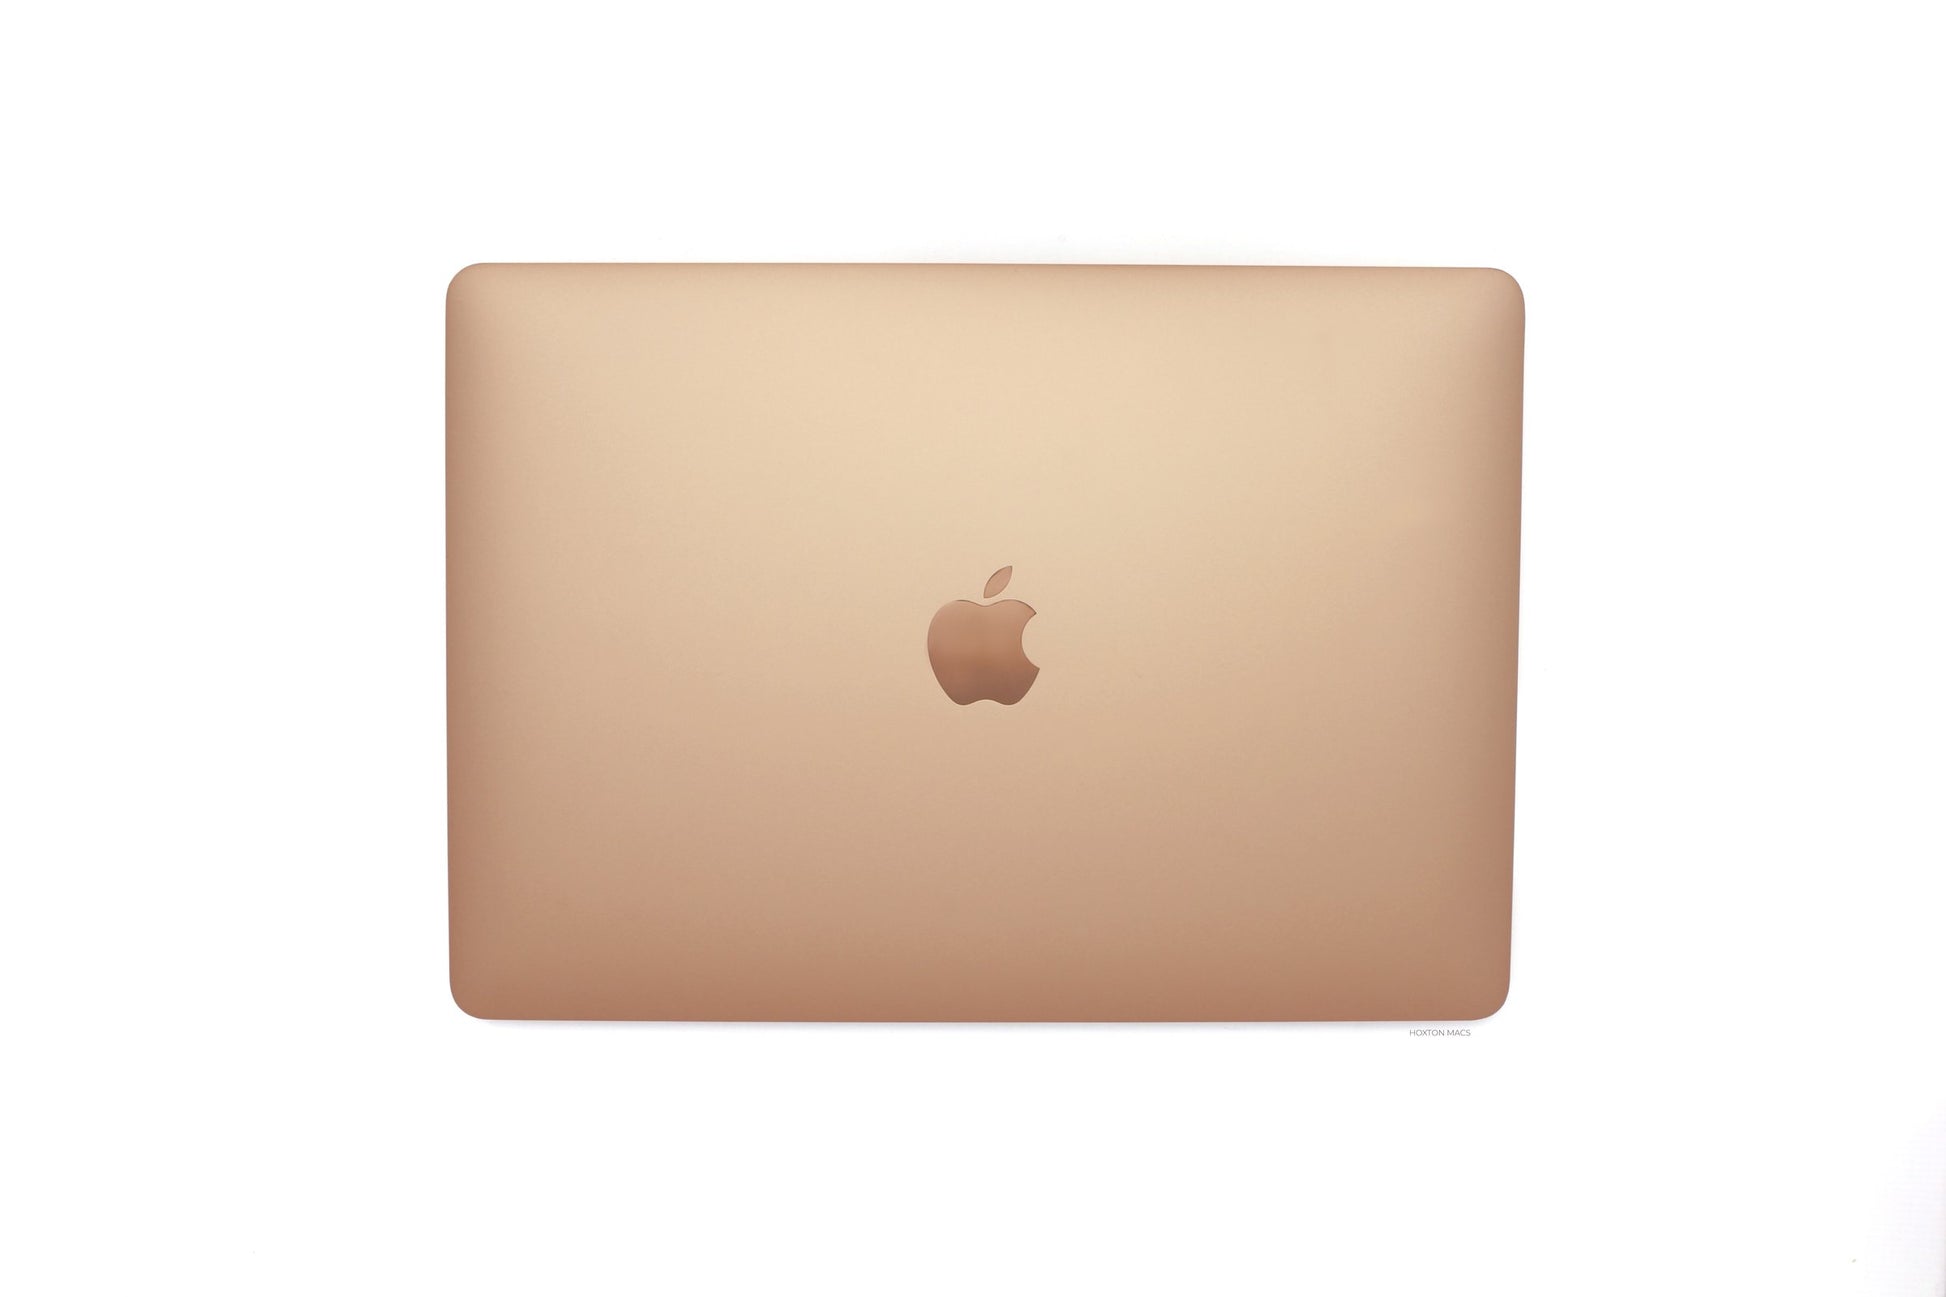 MacBook Air i7 1.2GHz 13in (Early 2020) 512GB SSD - Space Grey - Fair